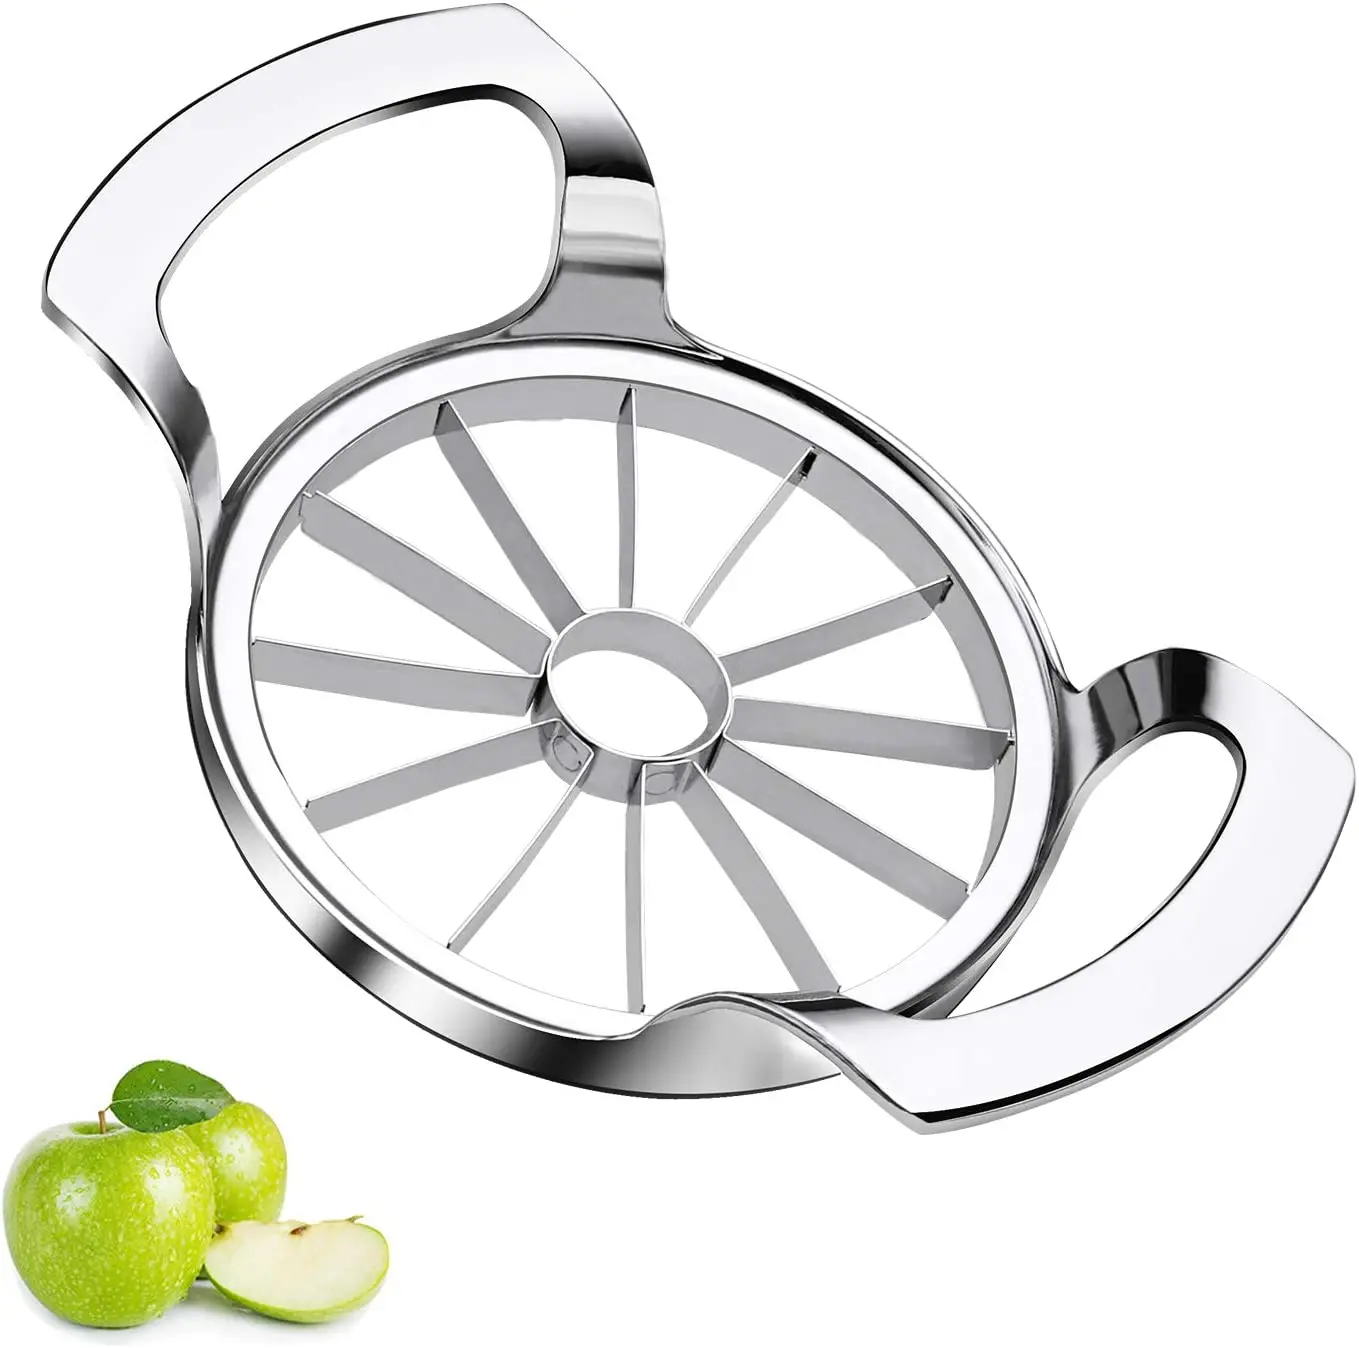 

Apple Slicer Upgraded Version 12-Blade Extra Large Apple Corer Peeler,Stainless Steel Ultra-Sharp Fruit Corer & Slicer, Silver